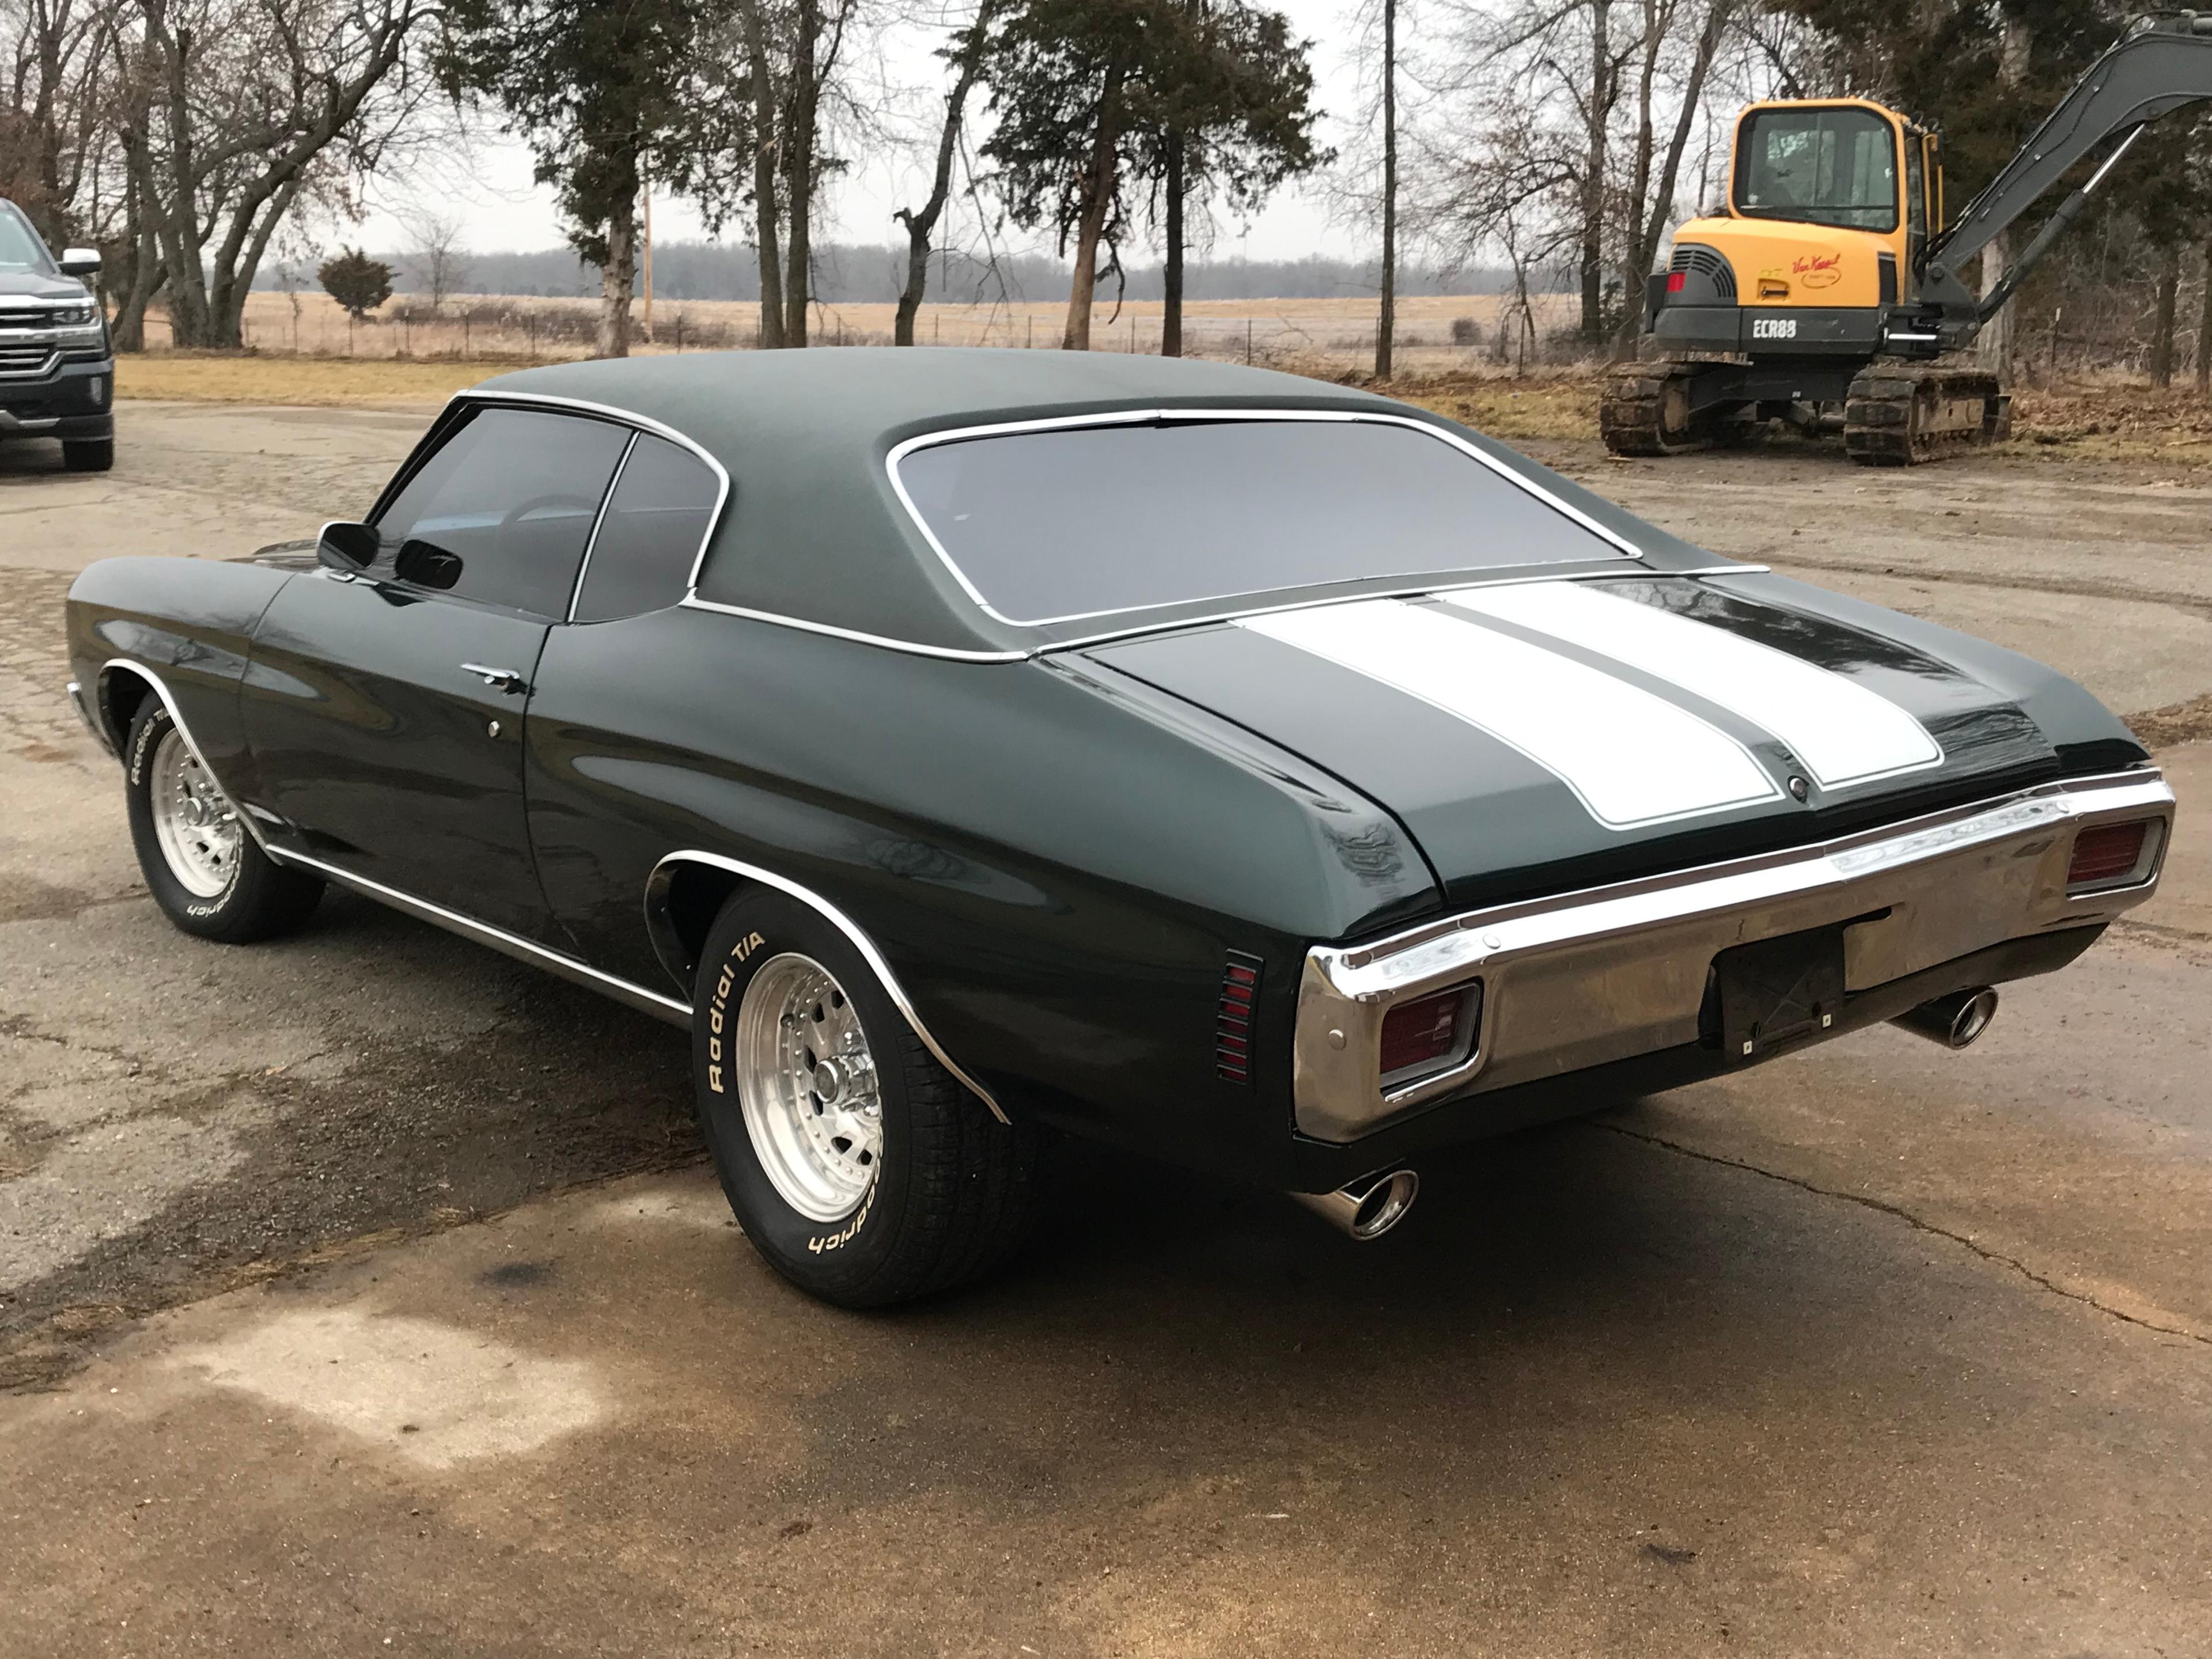 LOT 8: 1970 Chevrolet Chevelle